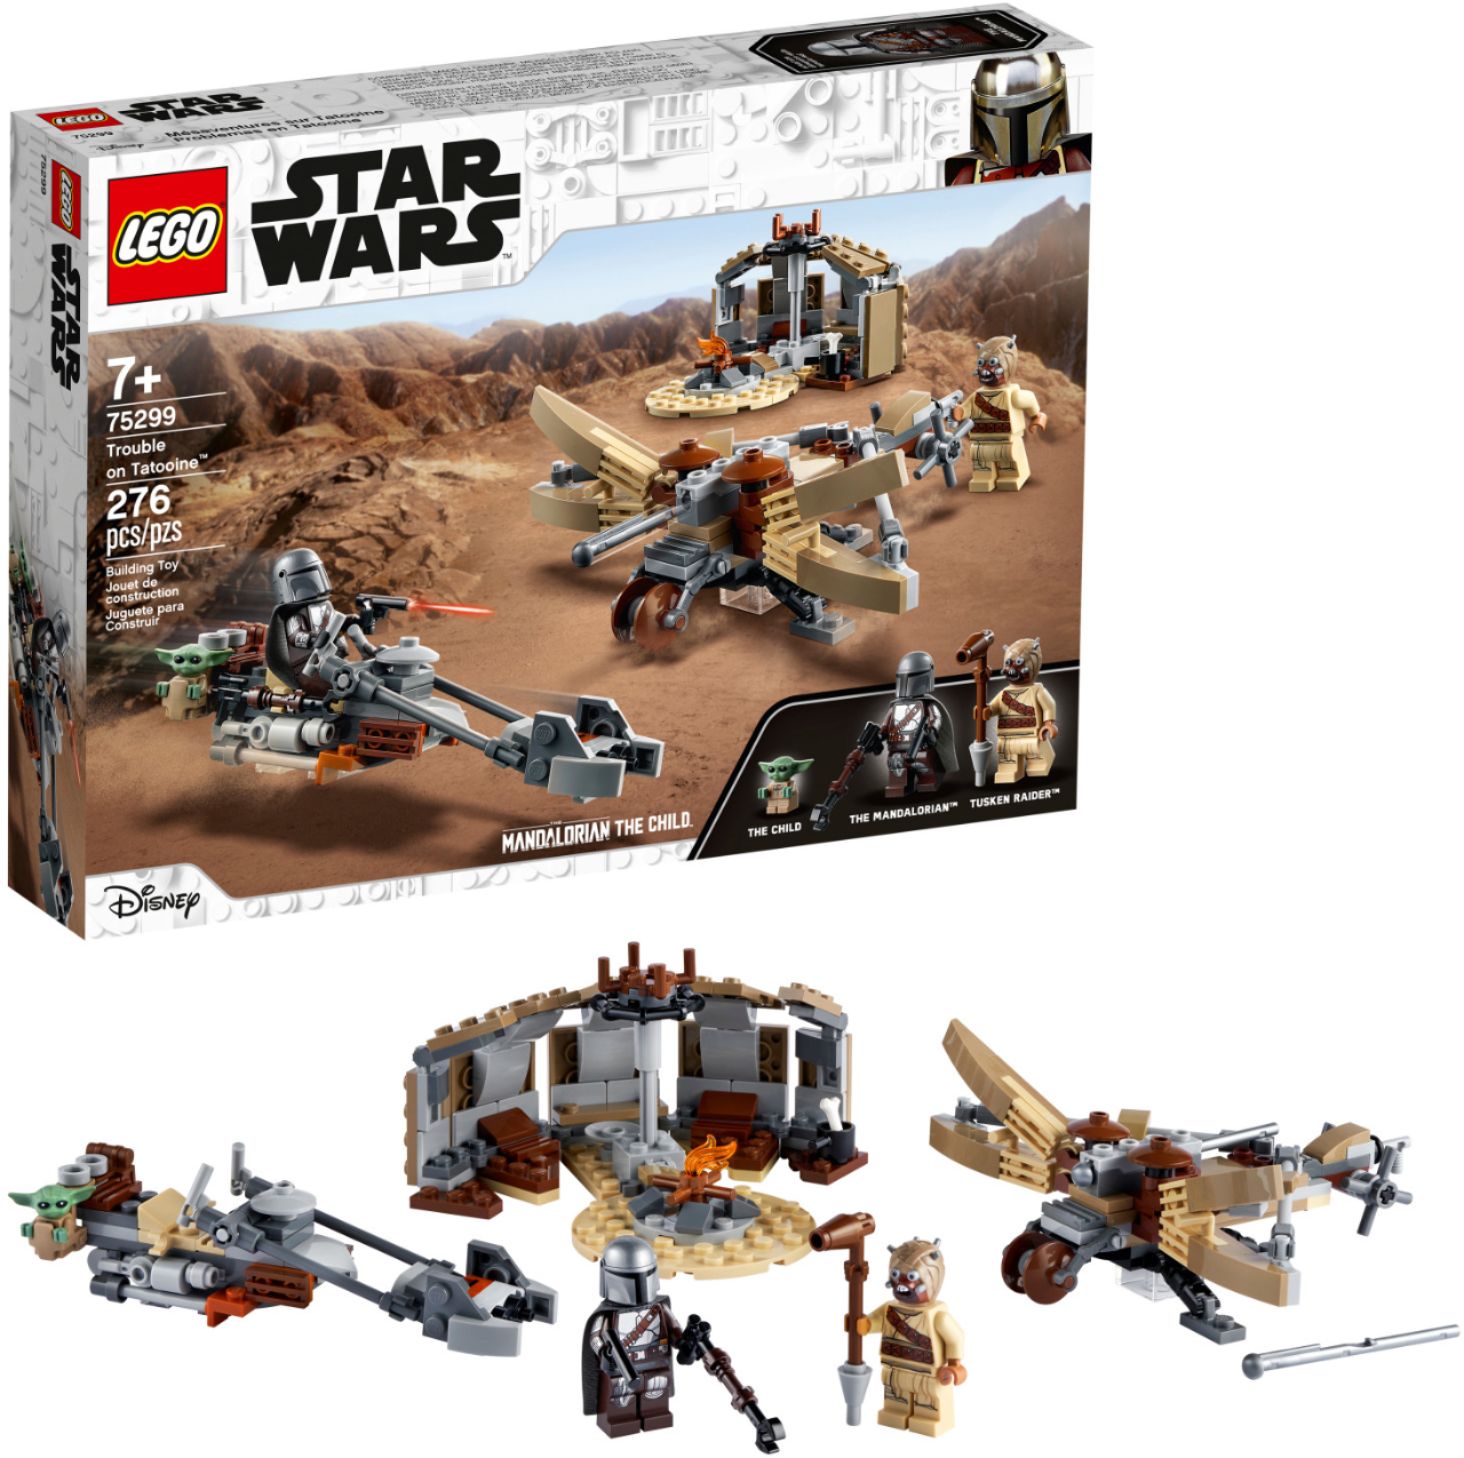 søn Rengør rummet eksplodere LEGO Star Wars Trouble on Tatooine 75299 6332846 - Best Buy